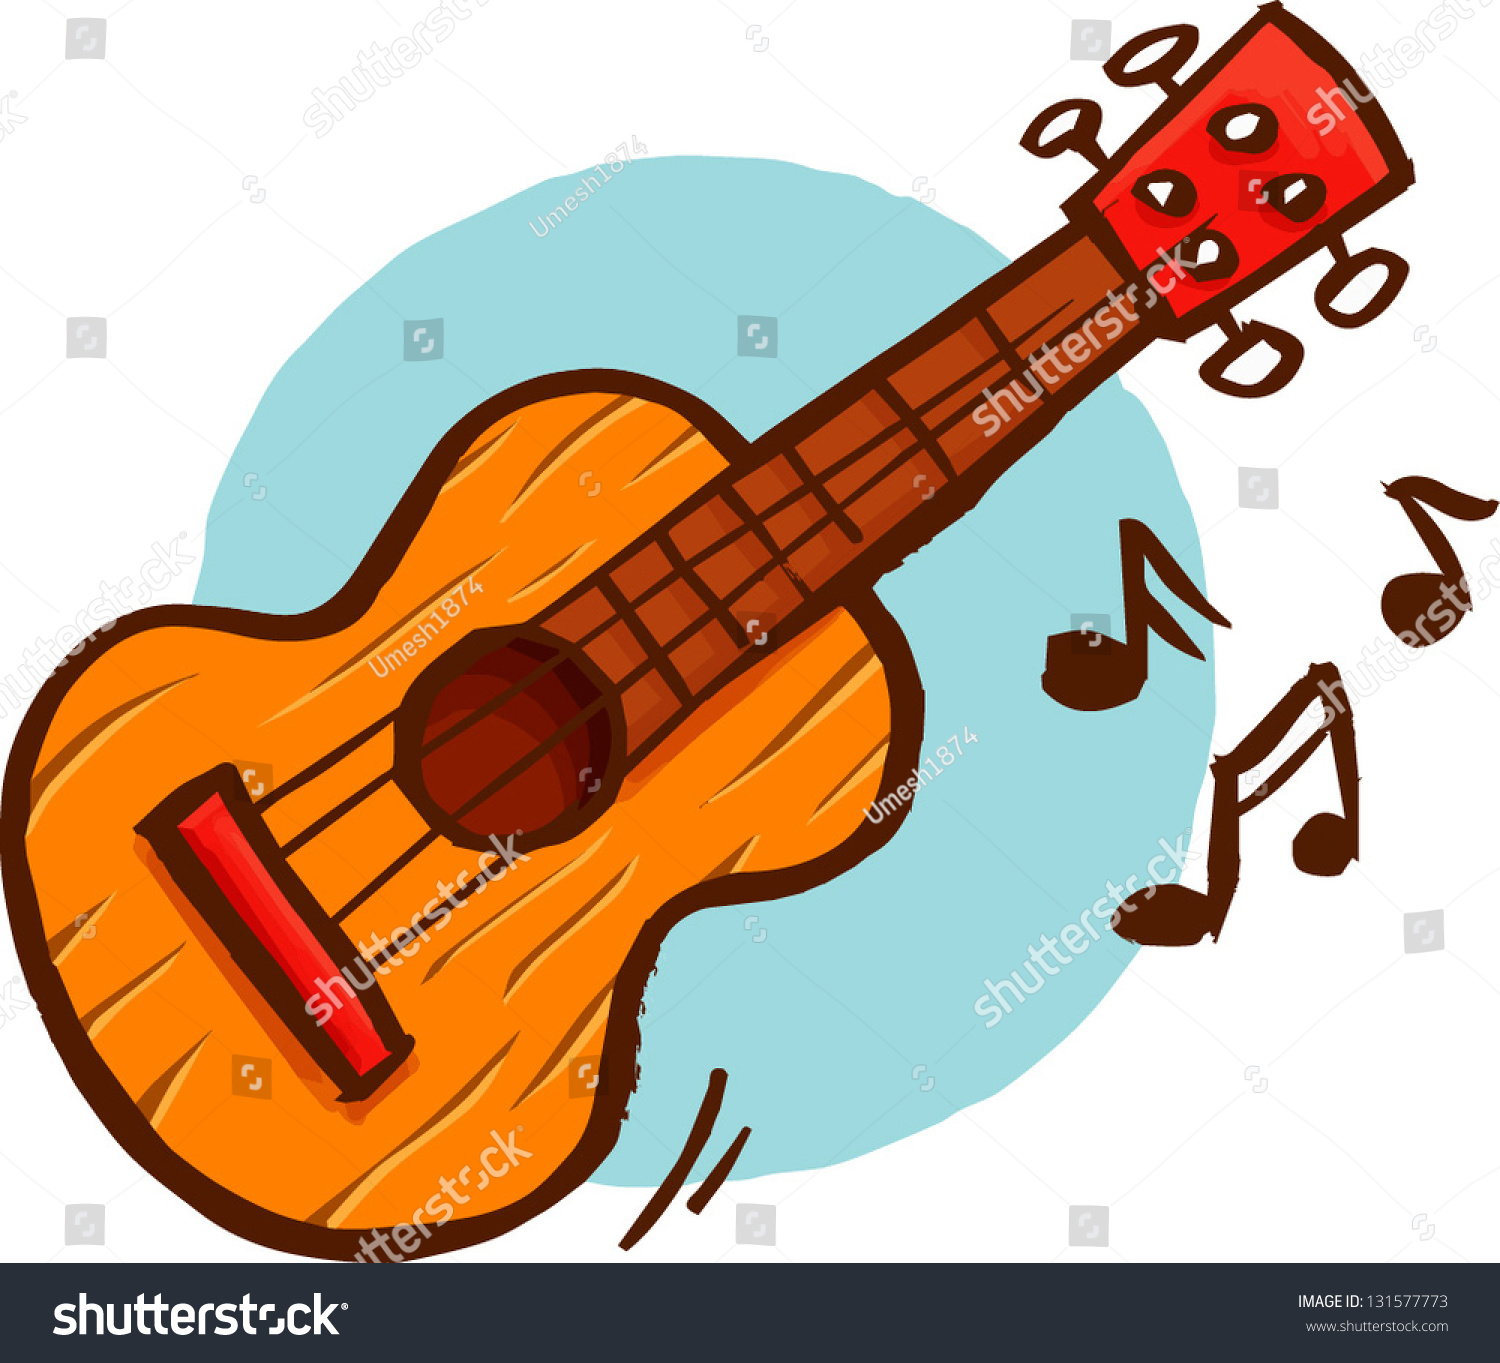 doodle art guitar